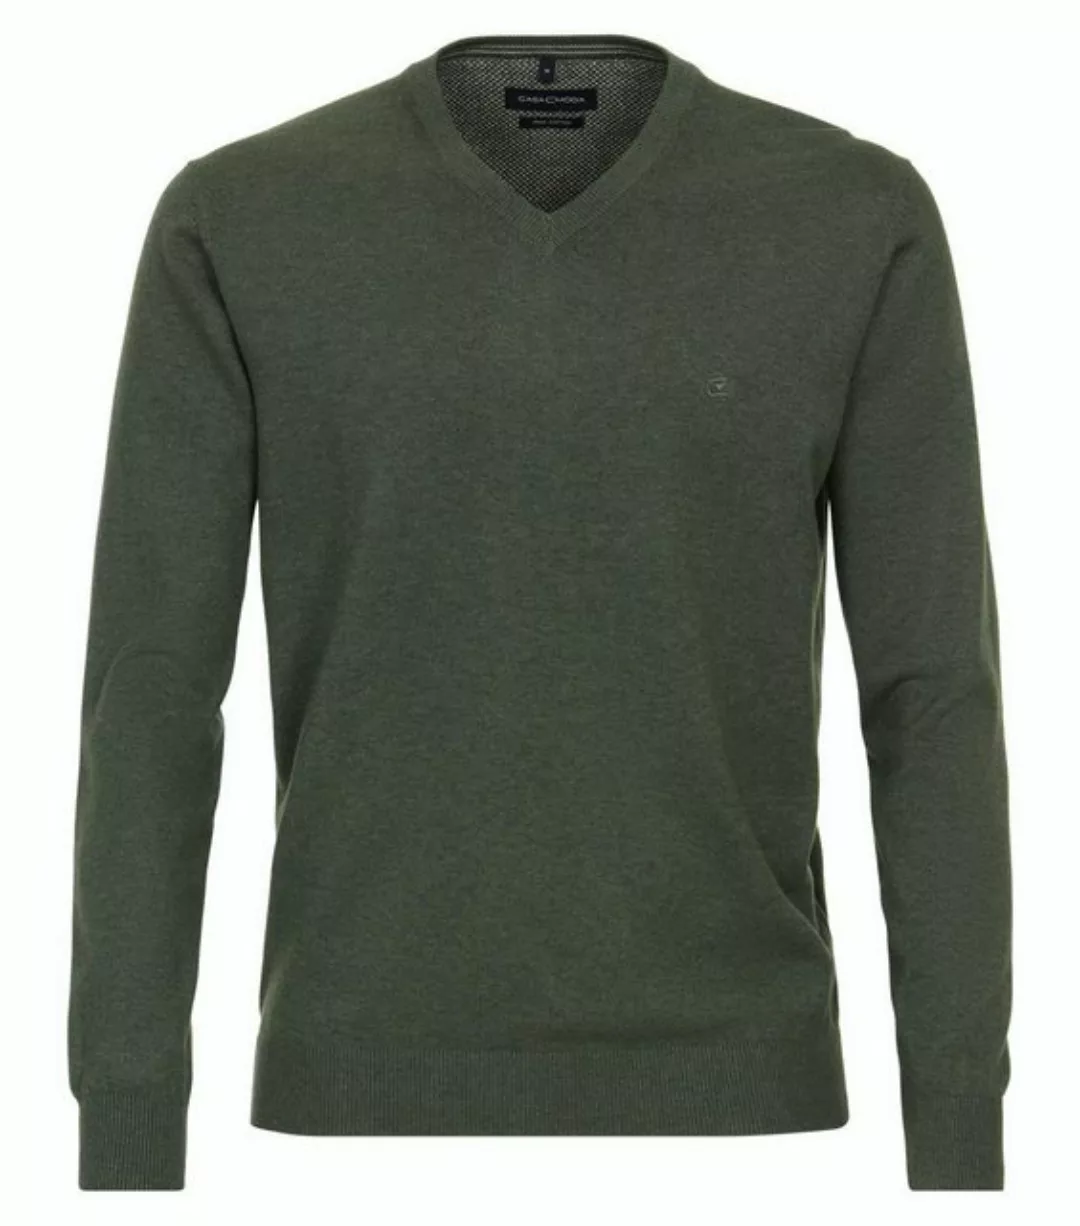 CASAMODA Sweatshirt Pullover V-Neck NOS, 314 grUEn günstig online kaufen